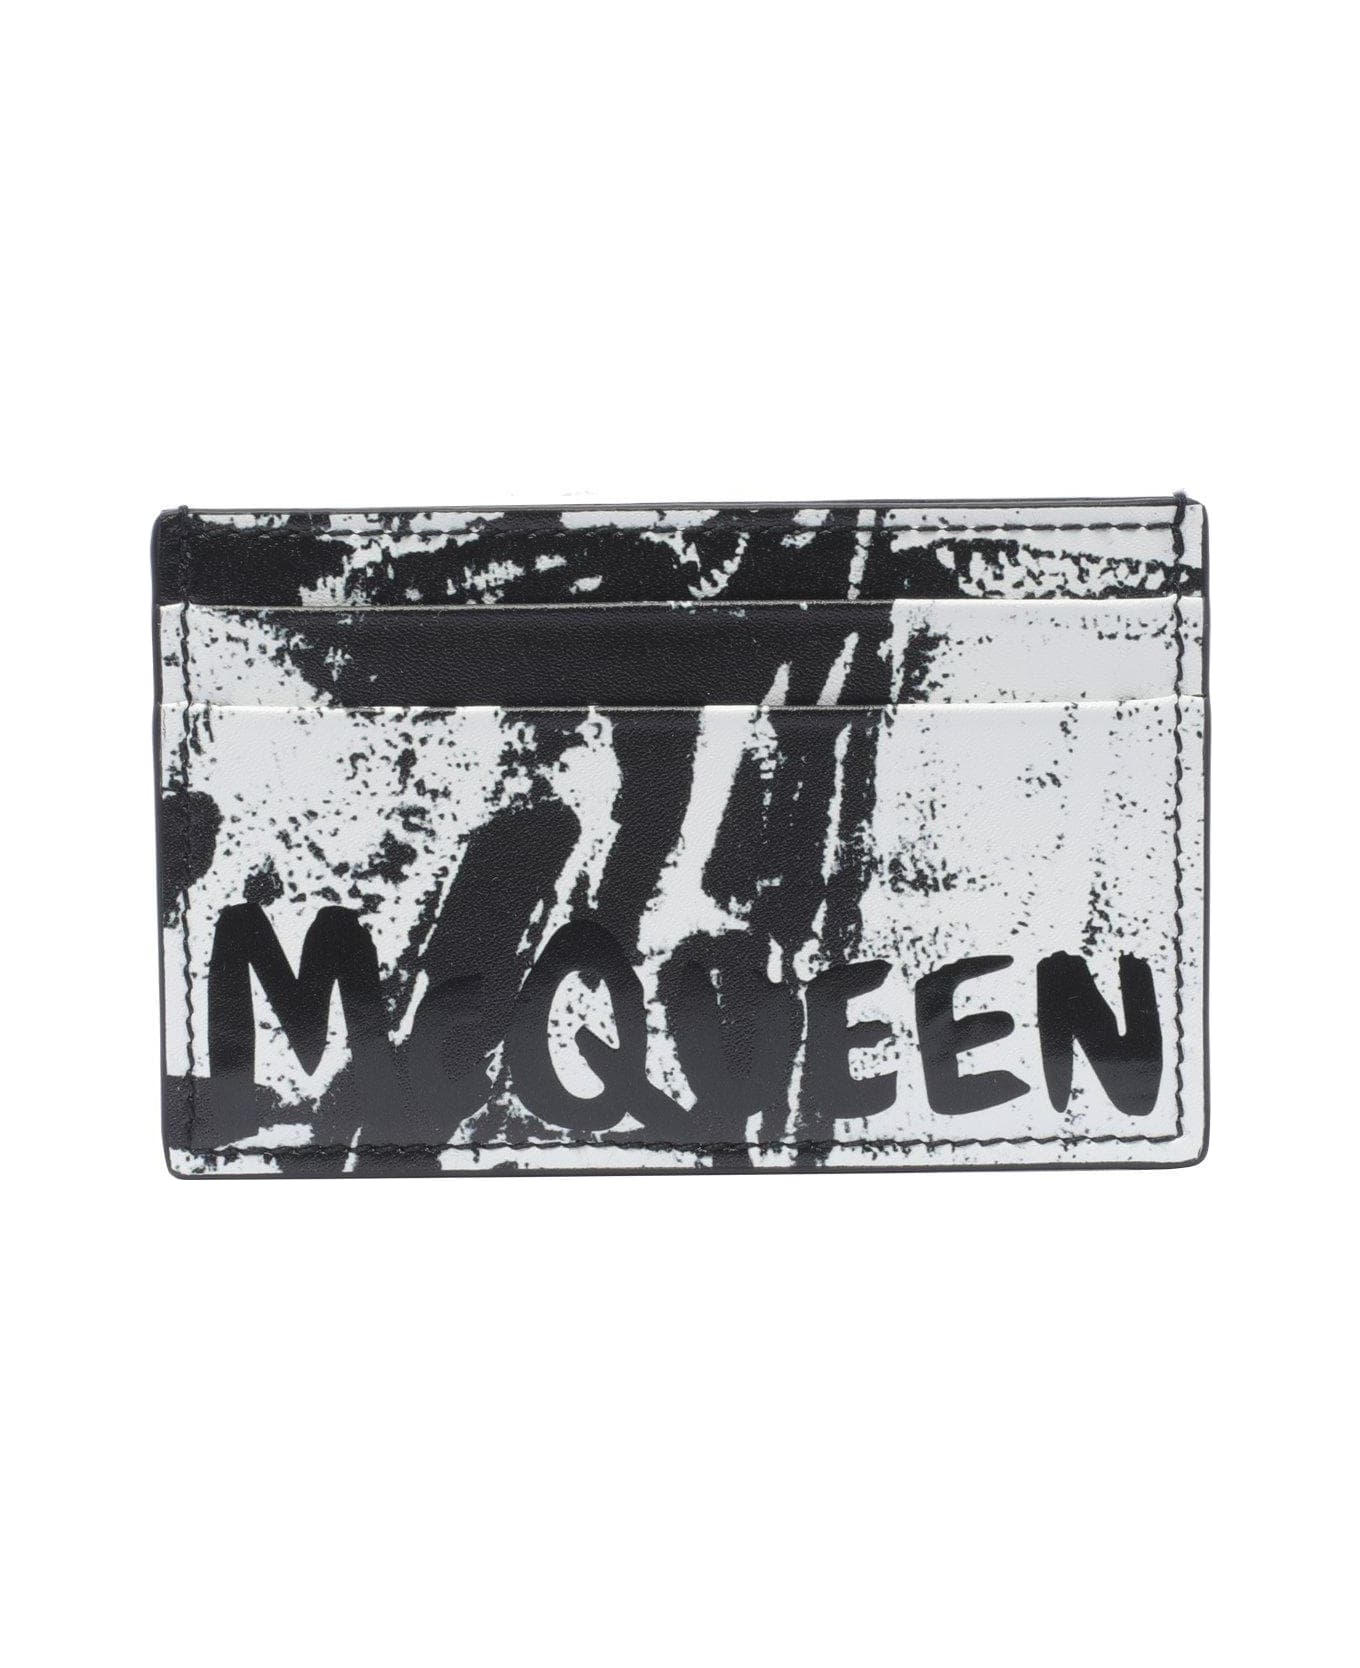 Alexander McQueen Logo Printed Cardholder - Black/white